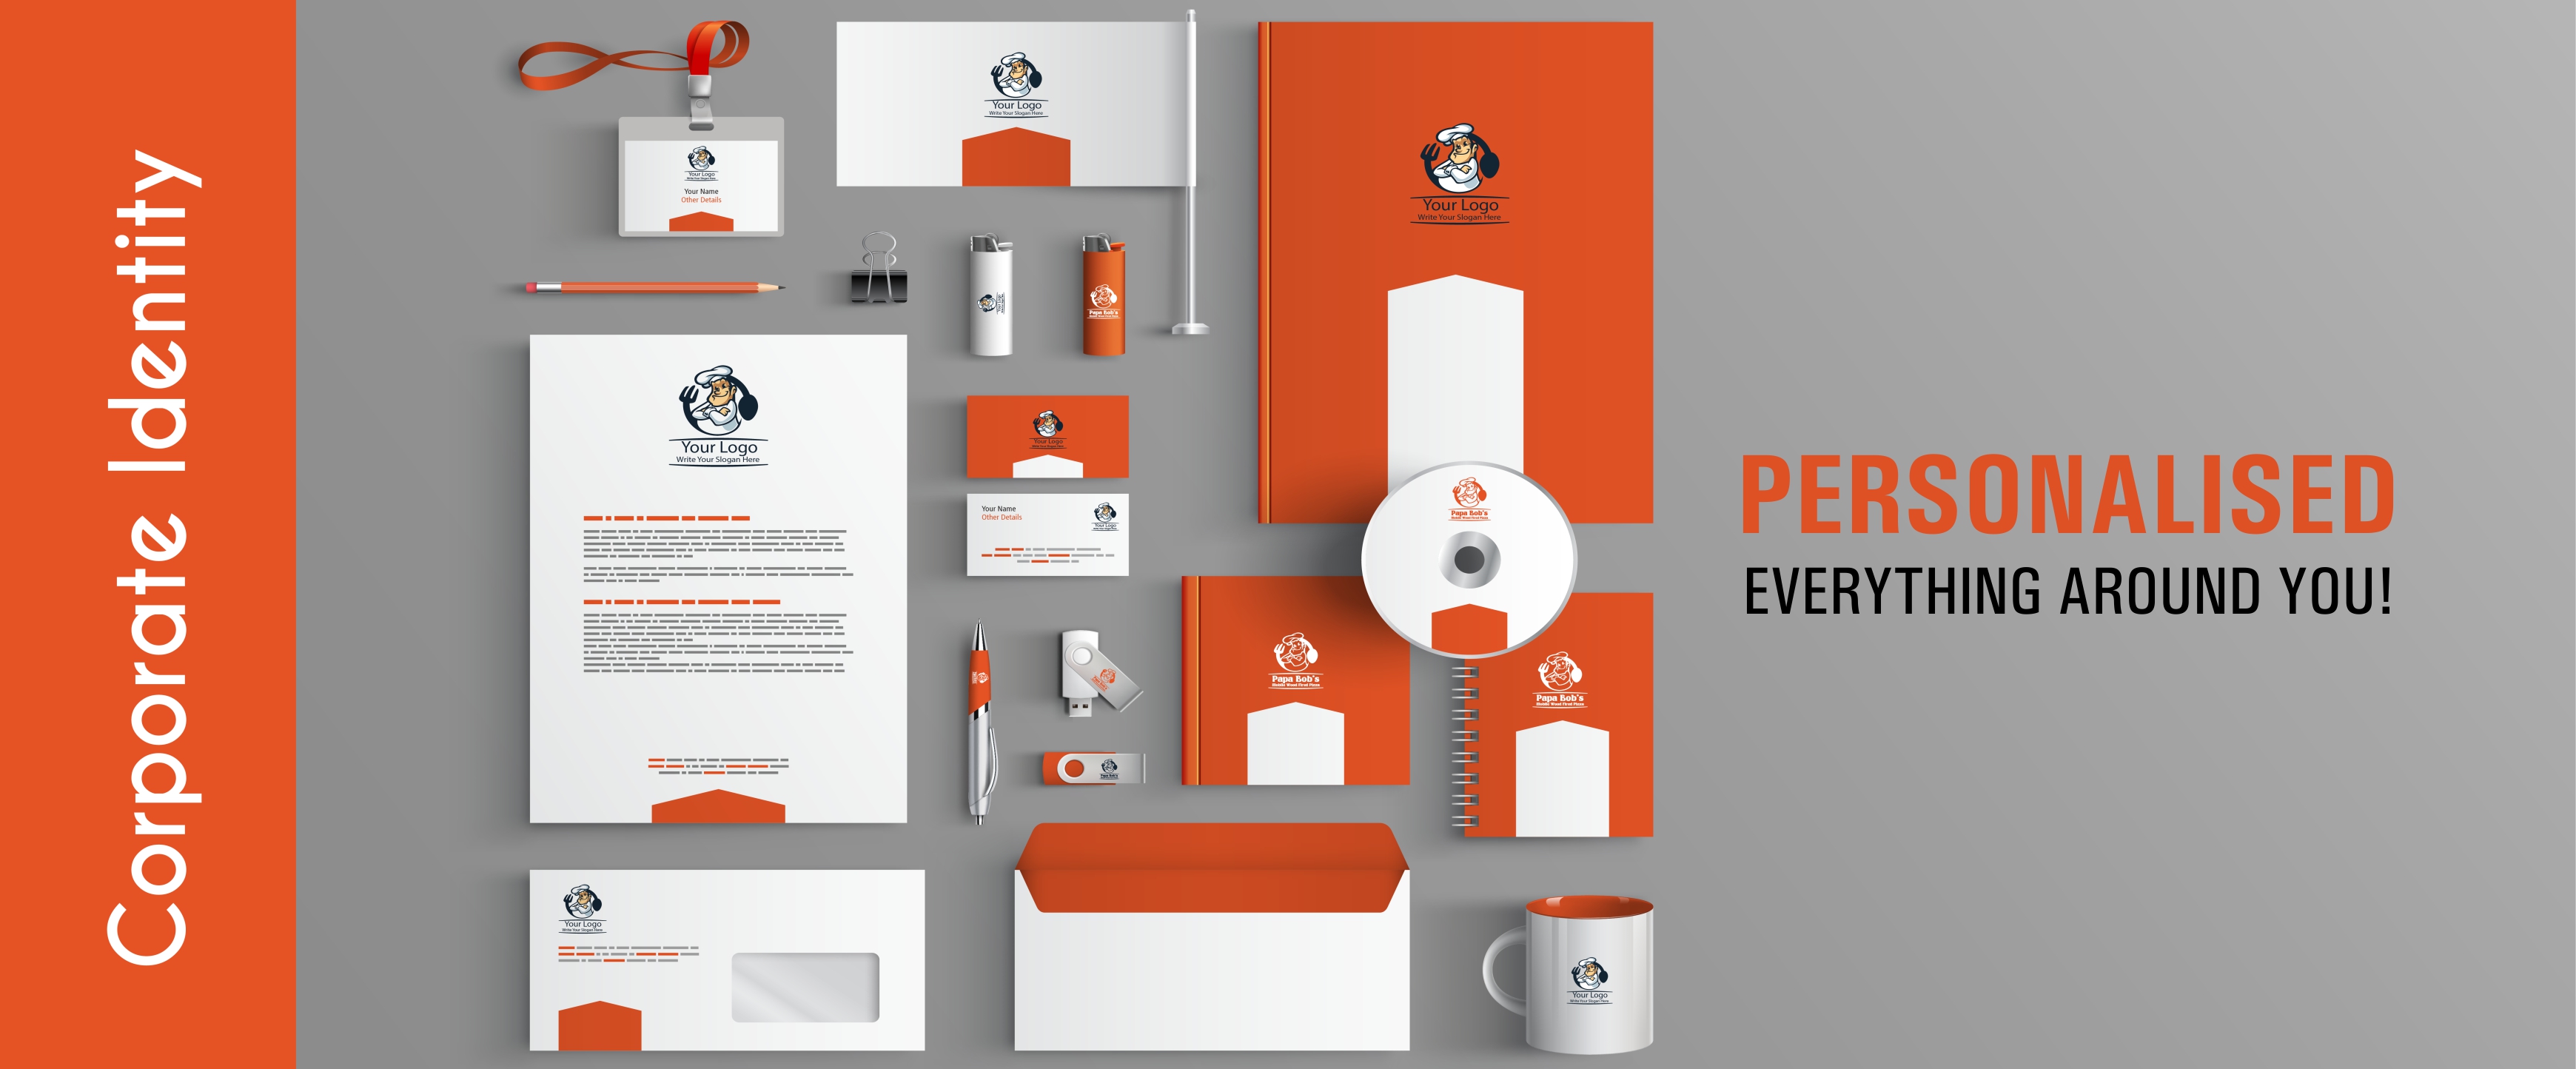 SLIDER 5 1 - Corporate Identity Design Service by Creative Studio